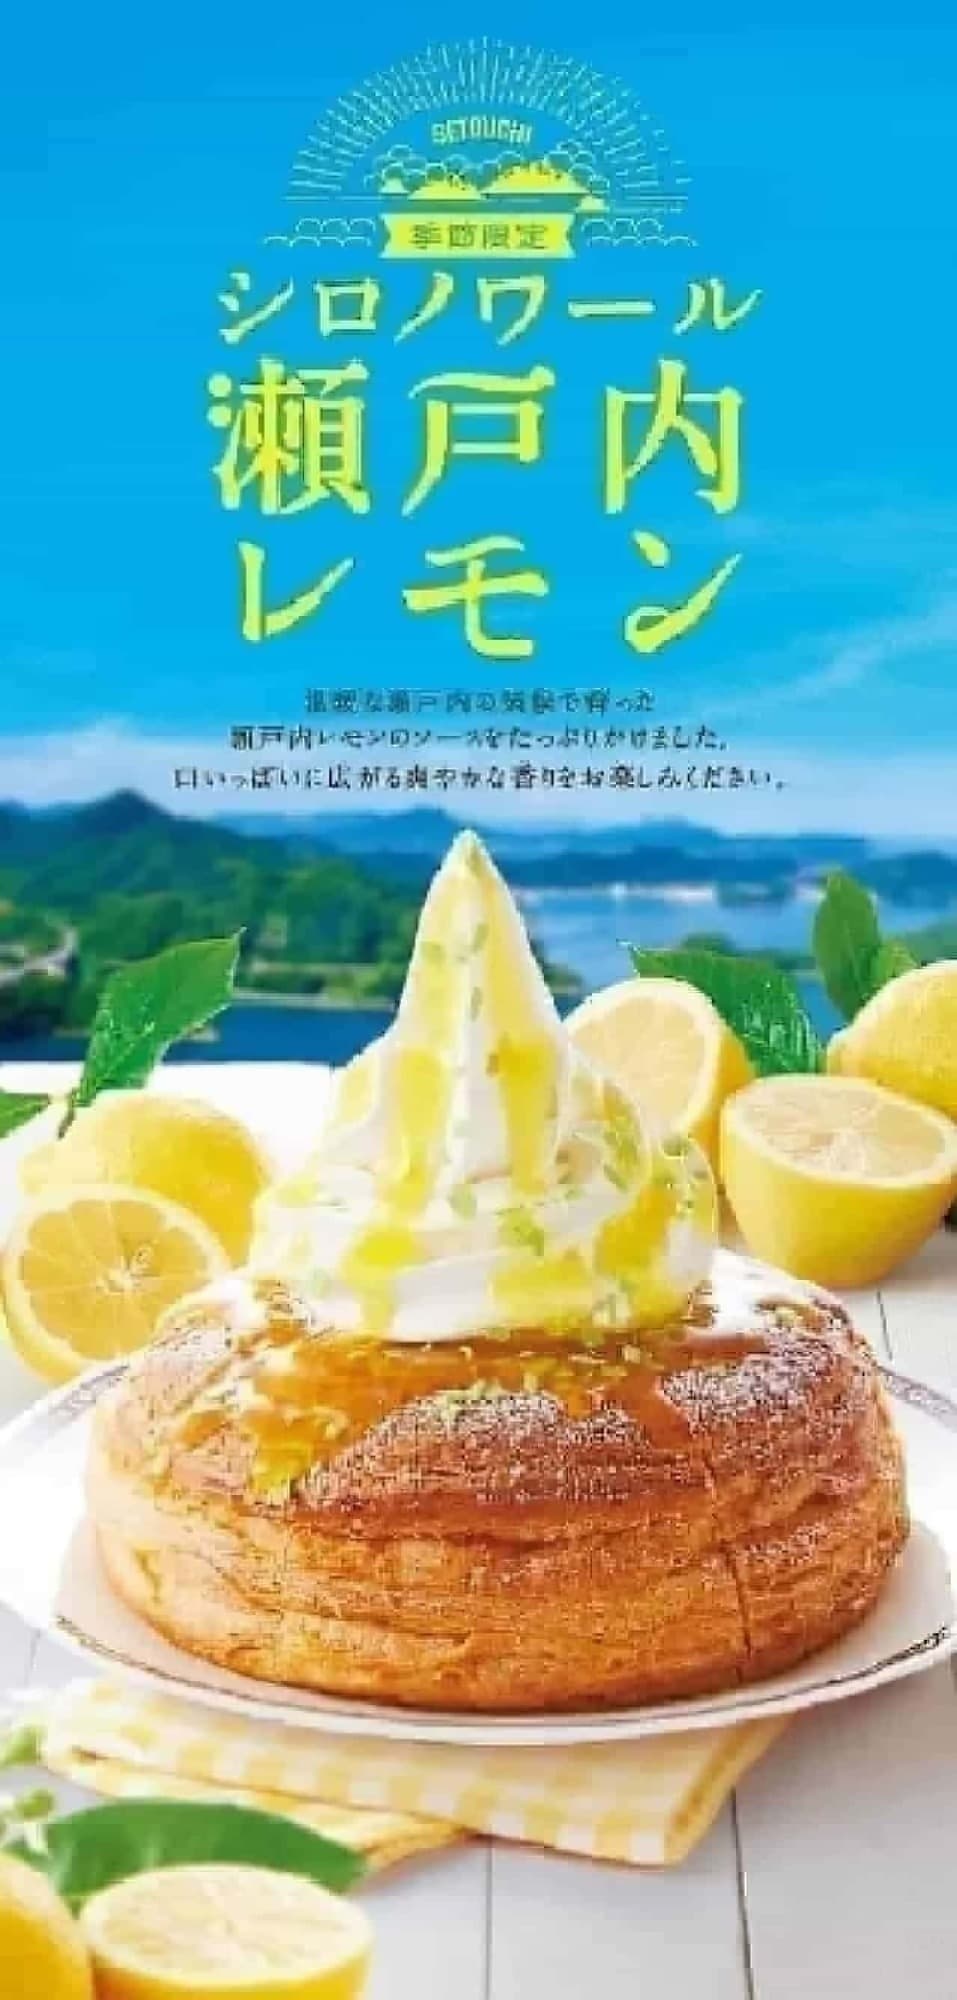 Shironoir Setouchi Lemon" at Komeda Coffee Shop